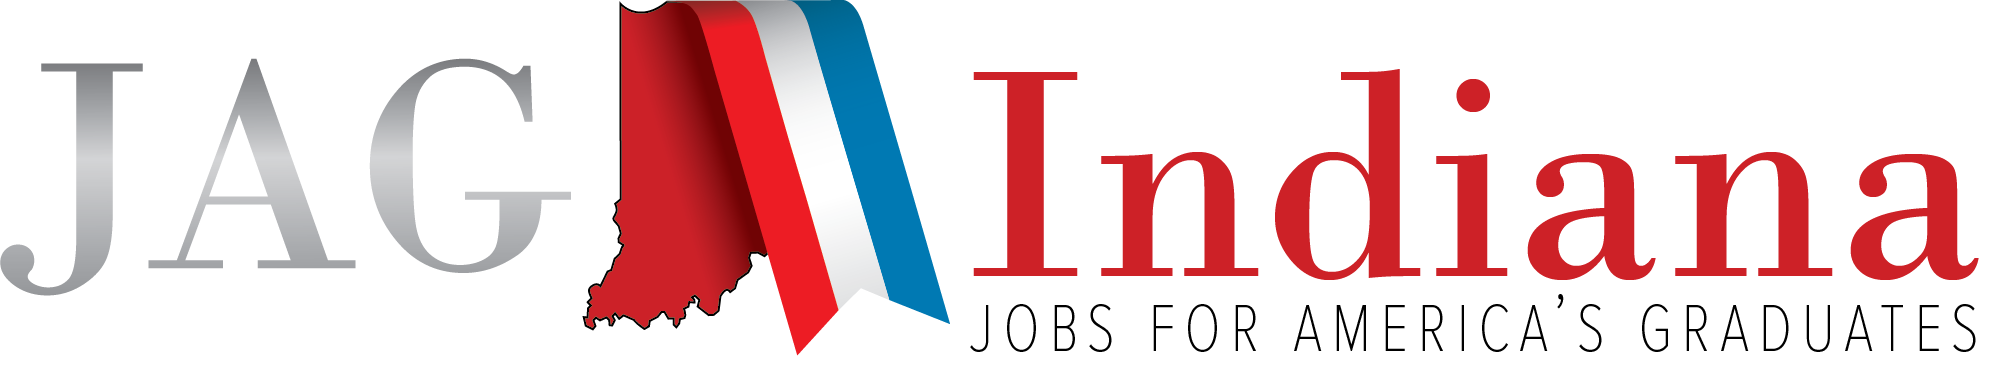 JAG Indiana Logo